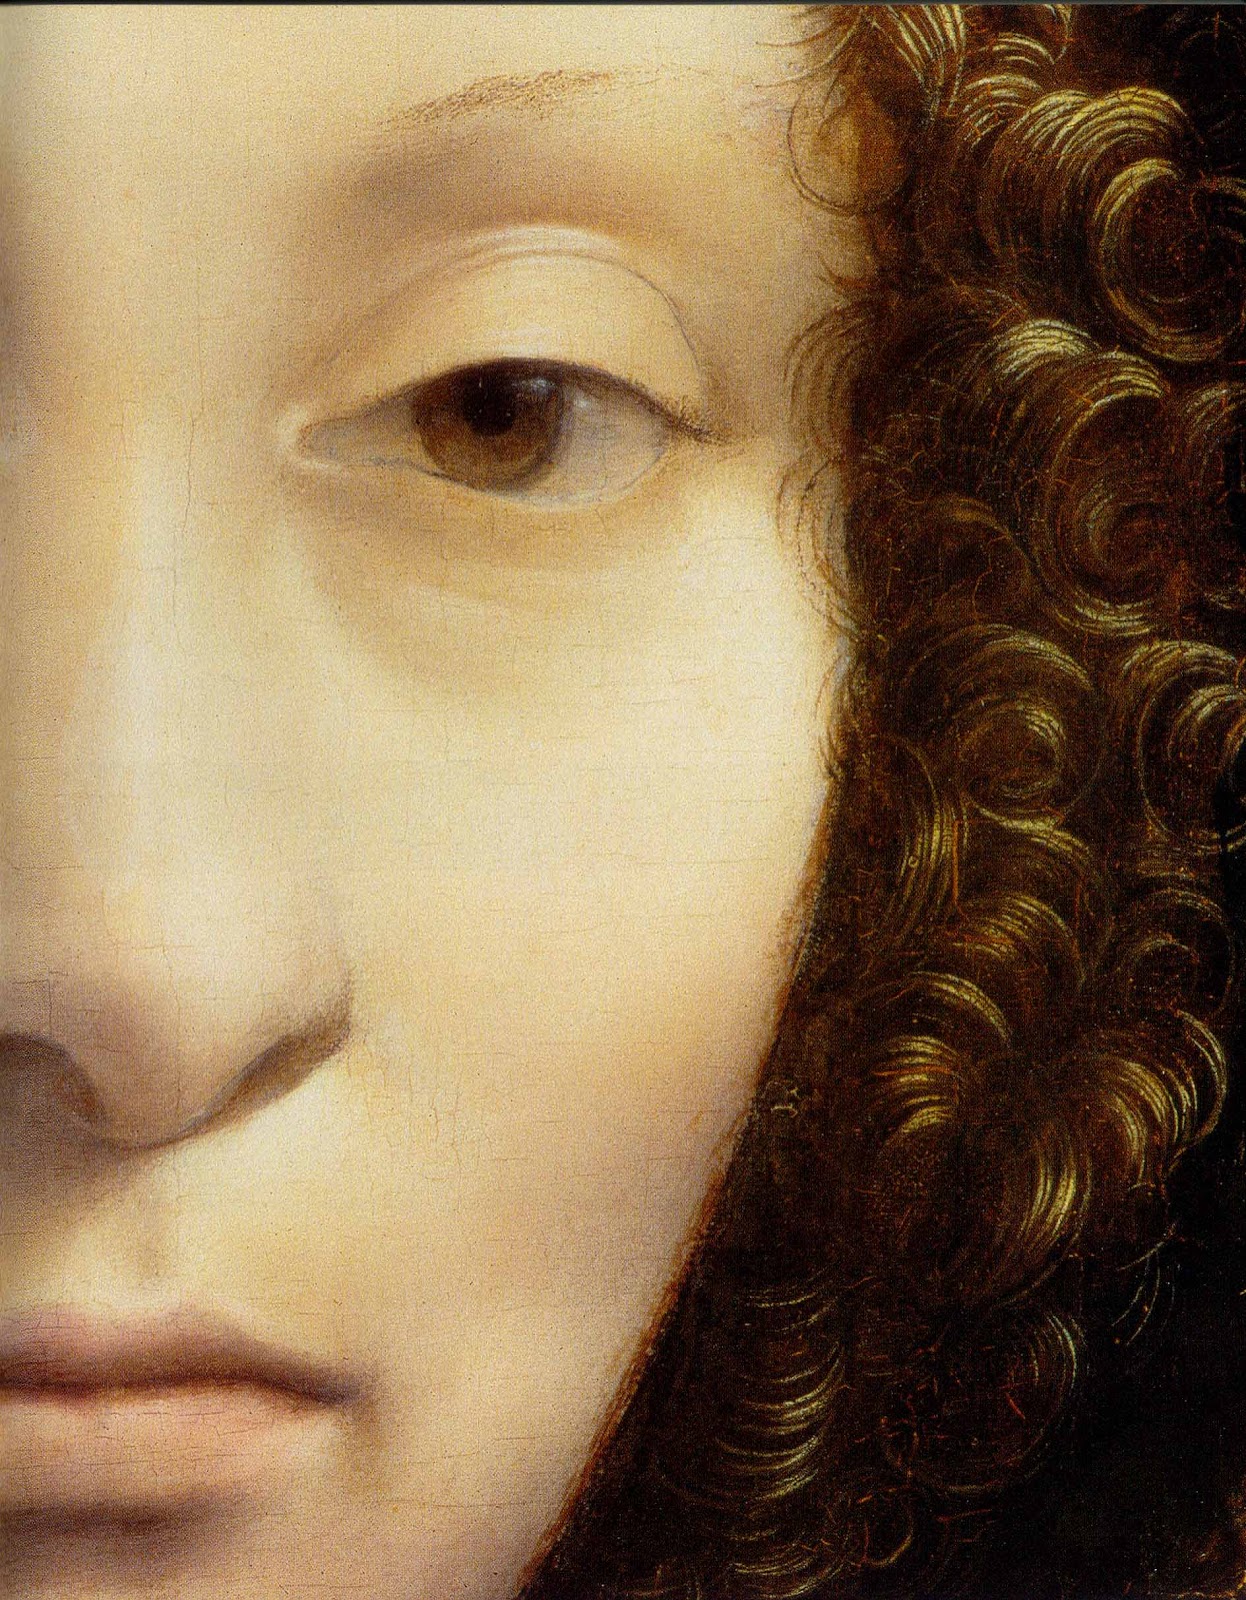 Leonardo+da+Vinci-1452-1519 (918).jpg